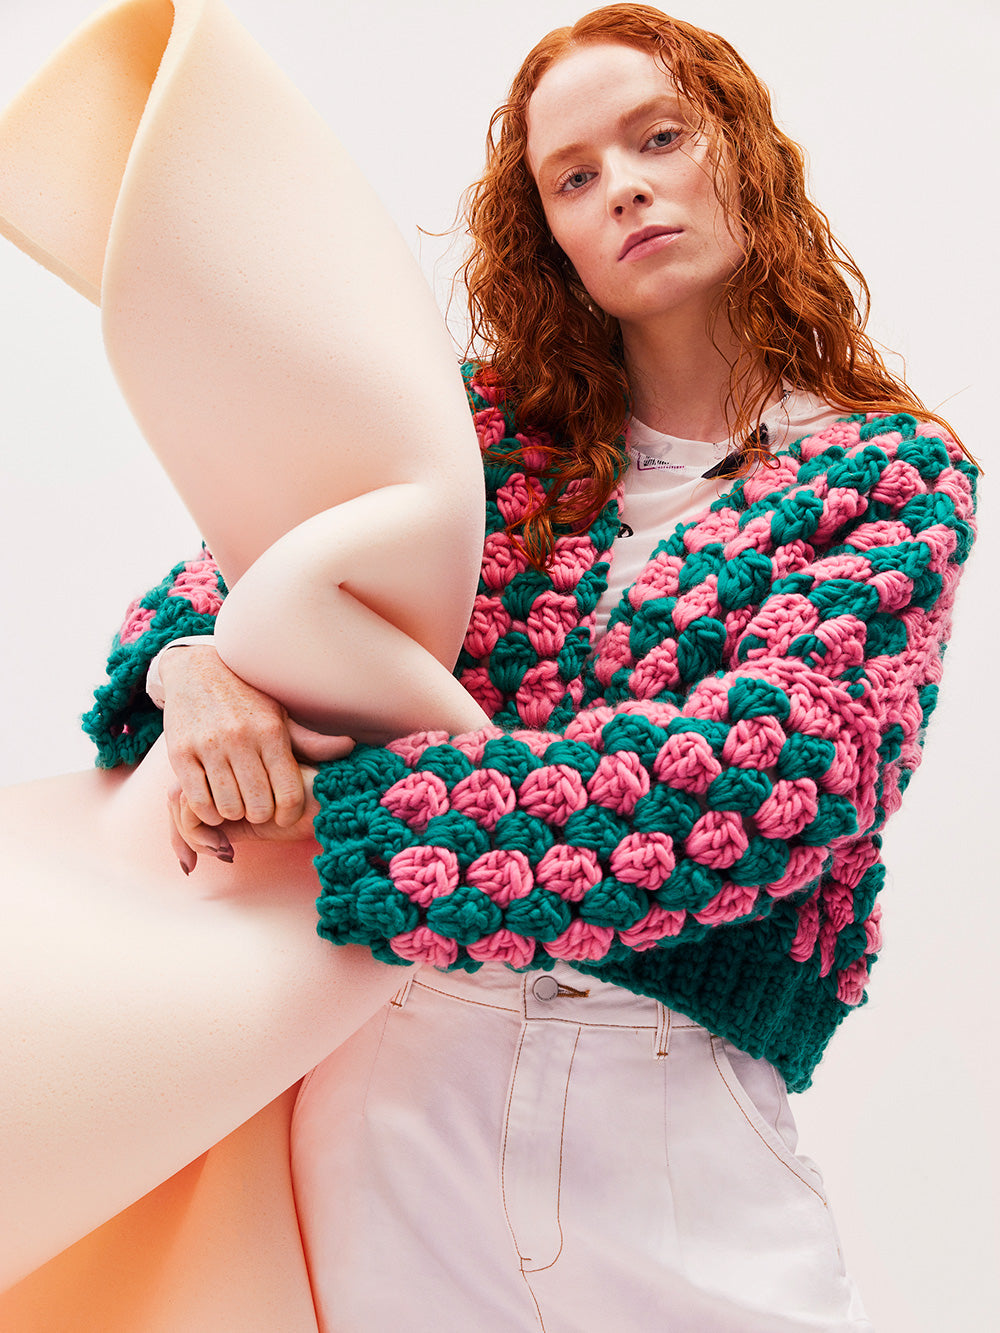 Mia Bomber Cardigan Crochet Kit